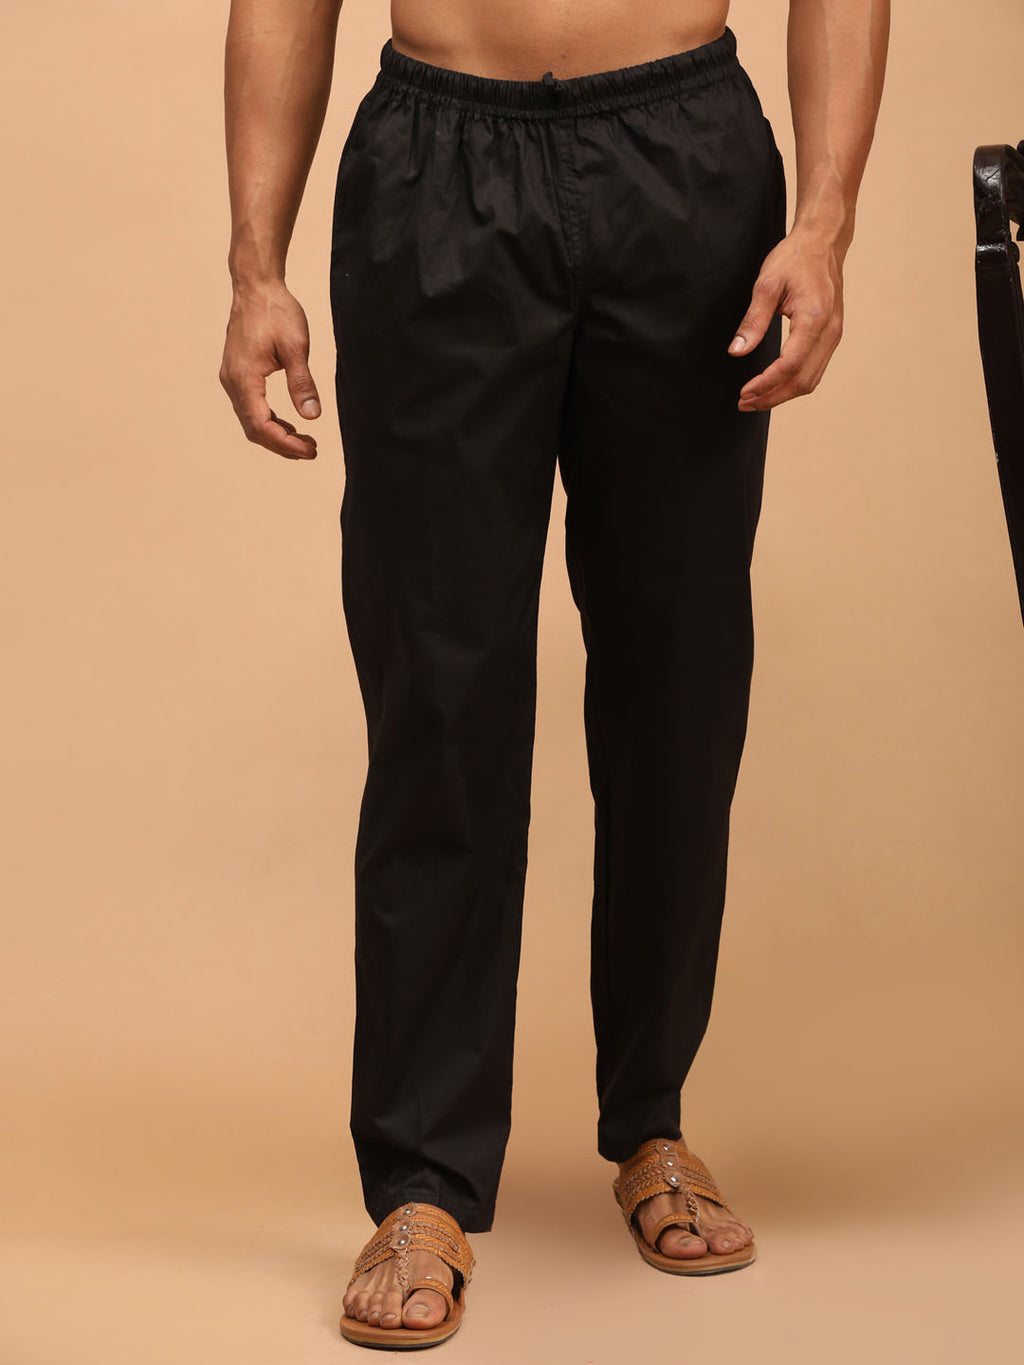 Buy Black Pajama Pants Online In India -  India